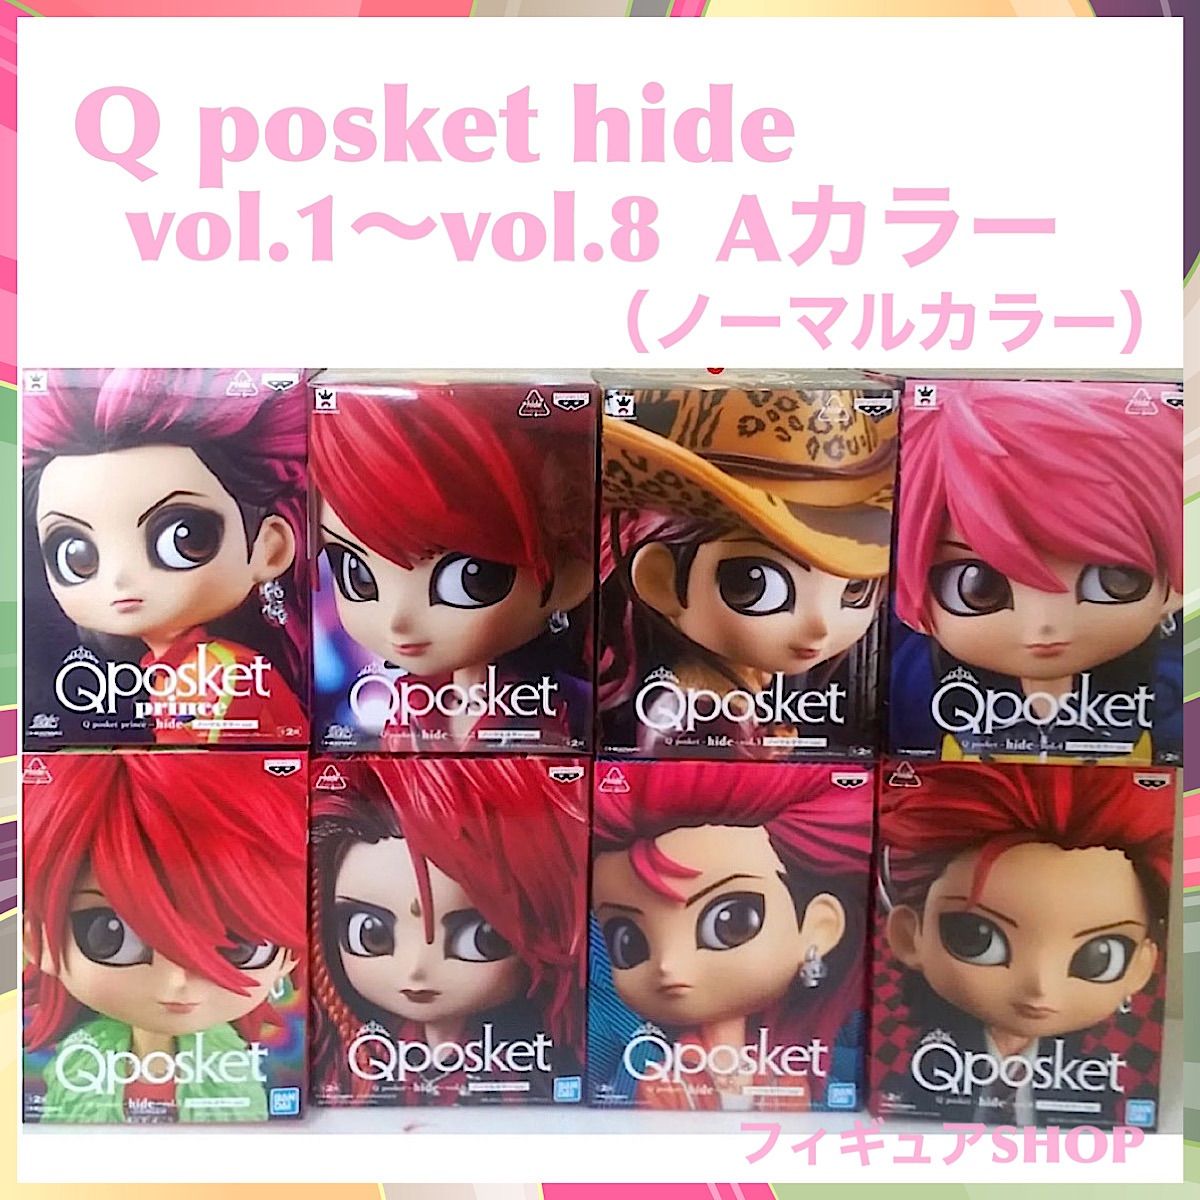 hide Qposket vol.8フィギュア